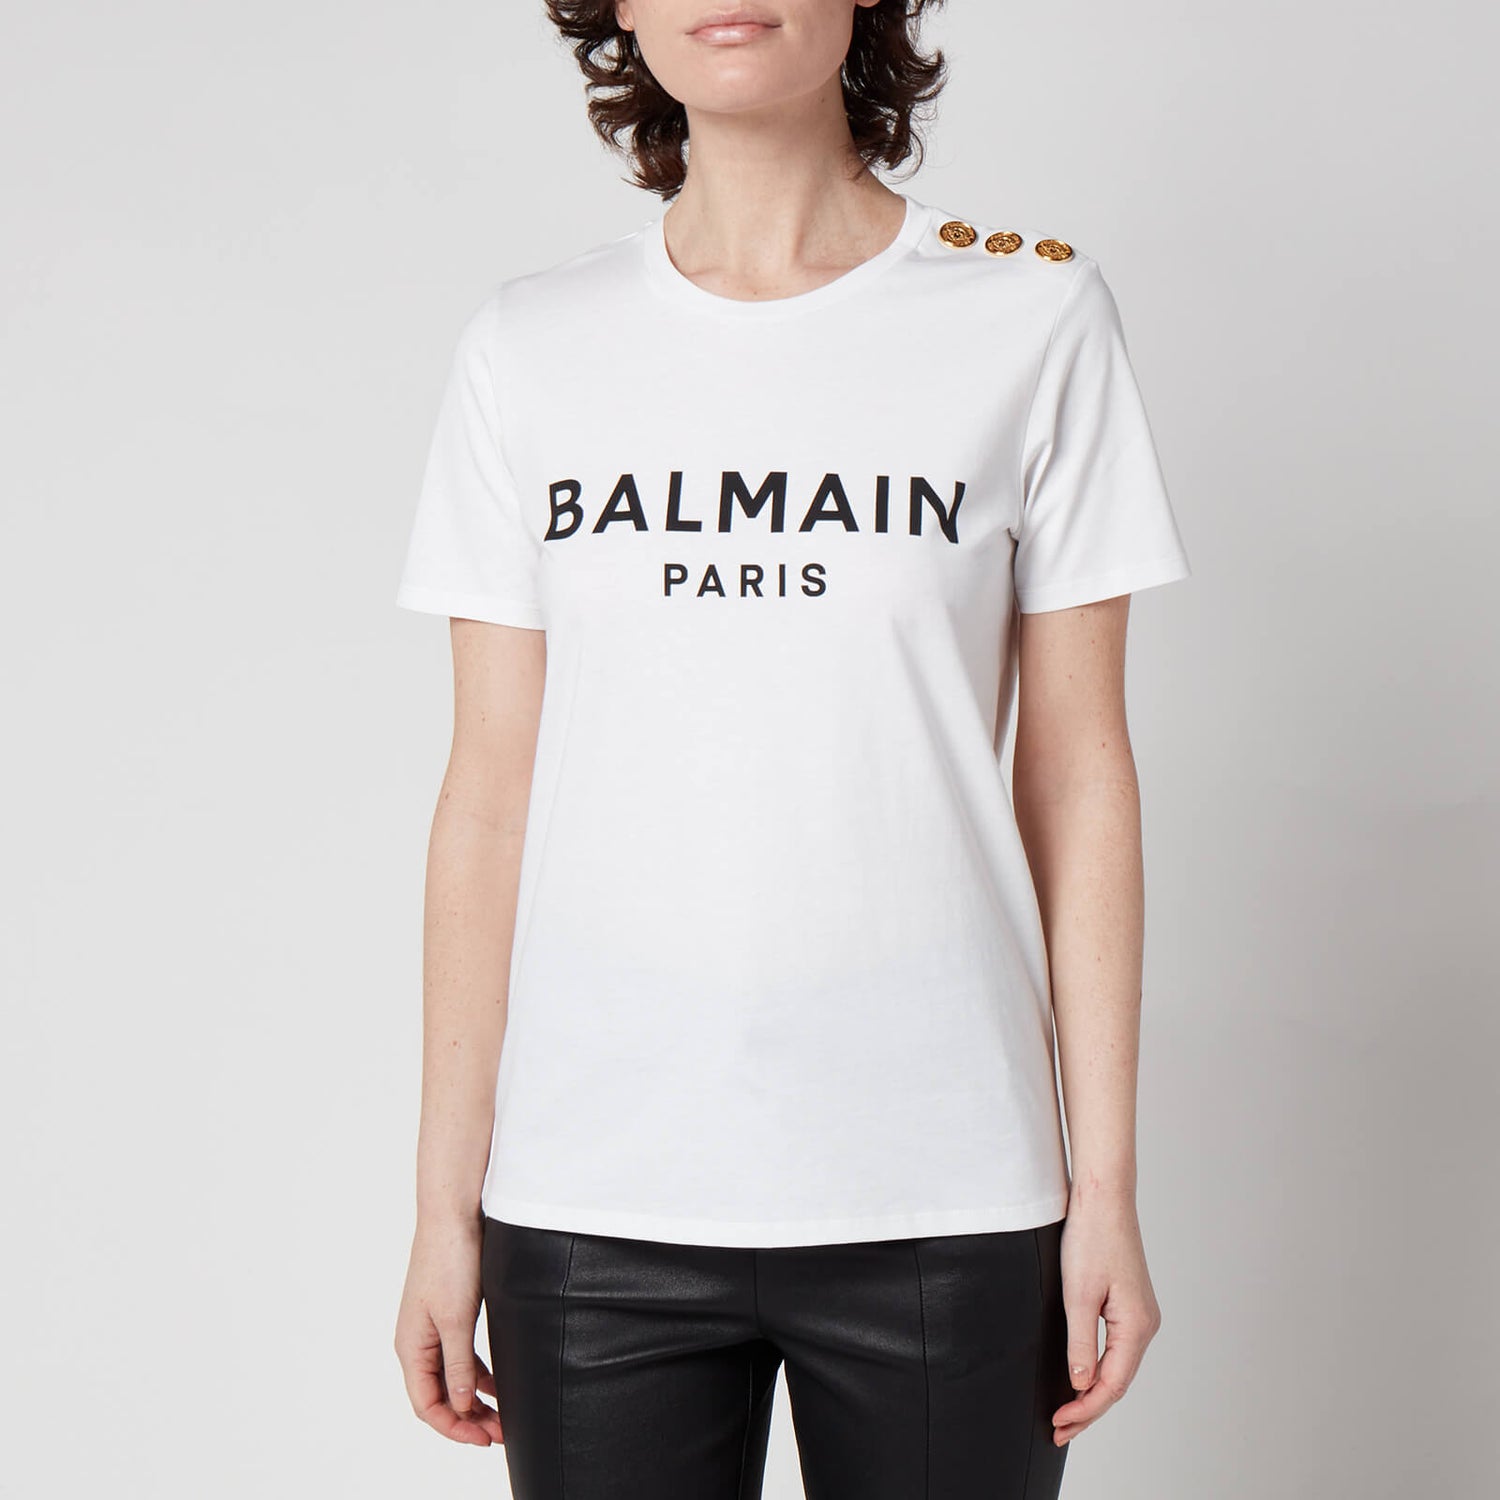 Balmain Women's 3 Button Printed Balmain T-Shirt - White - M